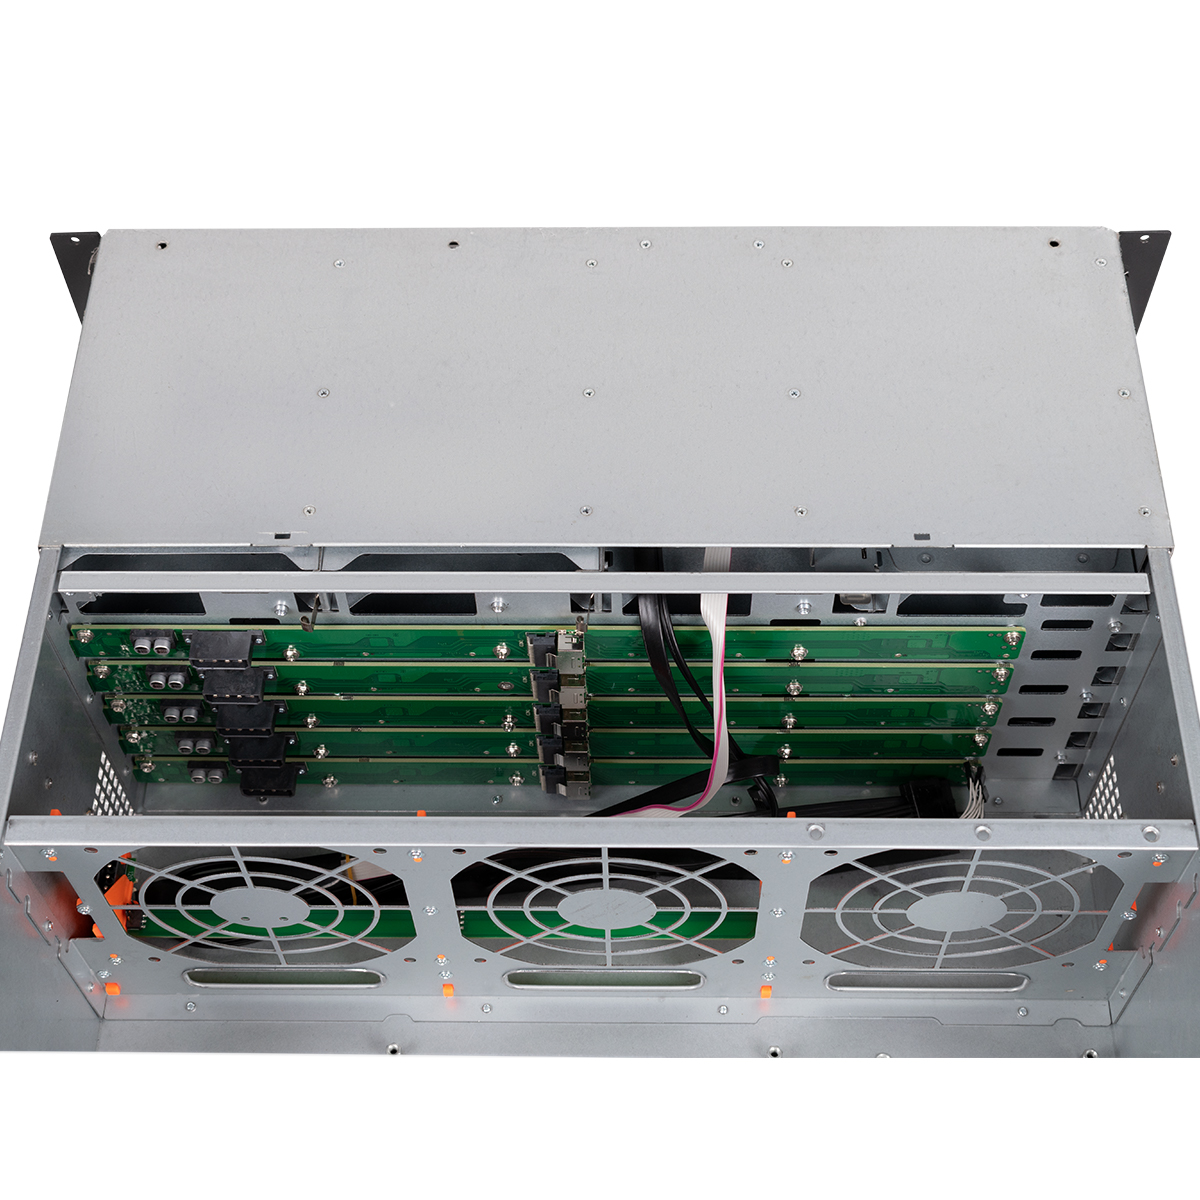 Unykach HSW4520 Server 4U Rack 20 Bays Hot Swap - Tailles de disque prises en charge 2,5", 3,5" - Cartes mères compatibles EEB, CEB, ATX, MicroATX - USB-A 2.0/3.0